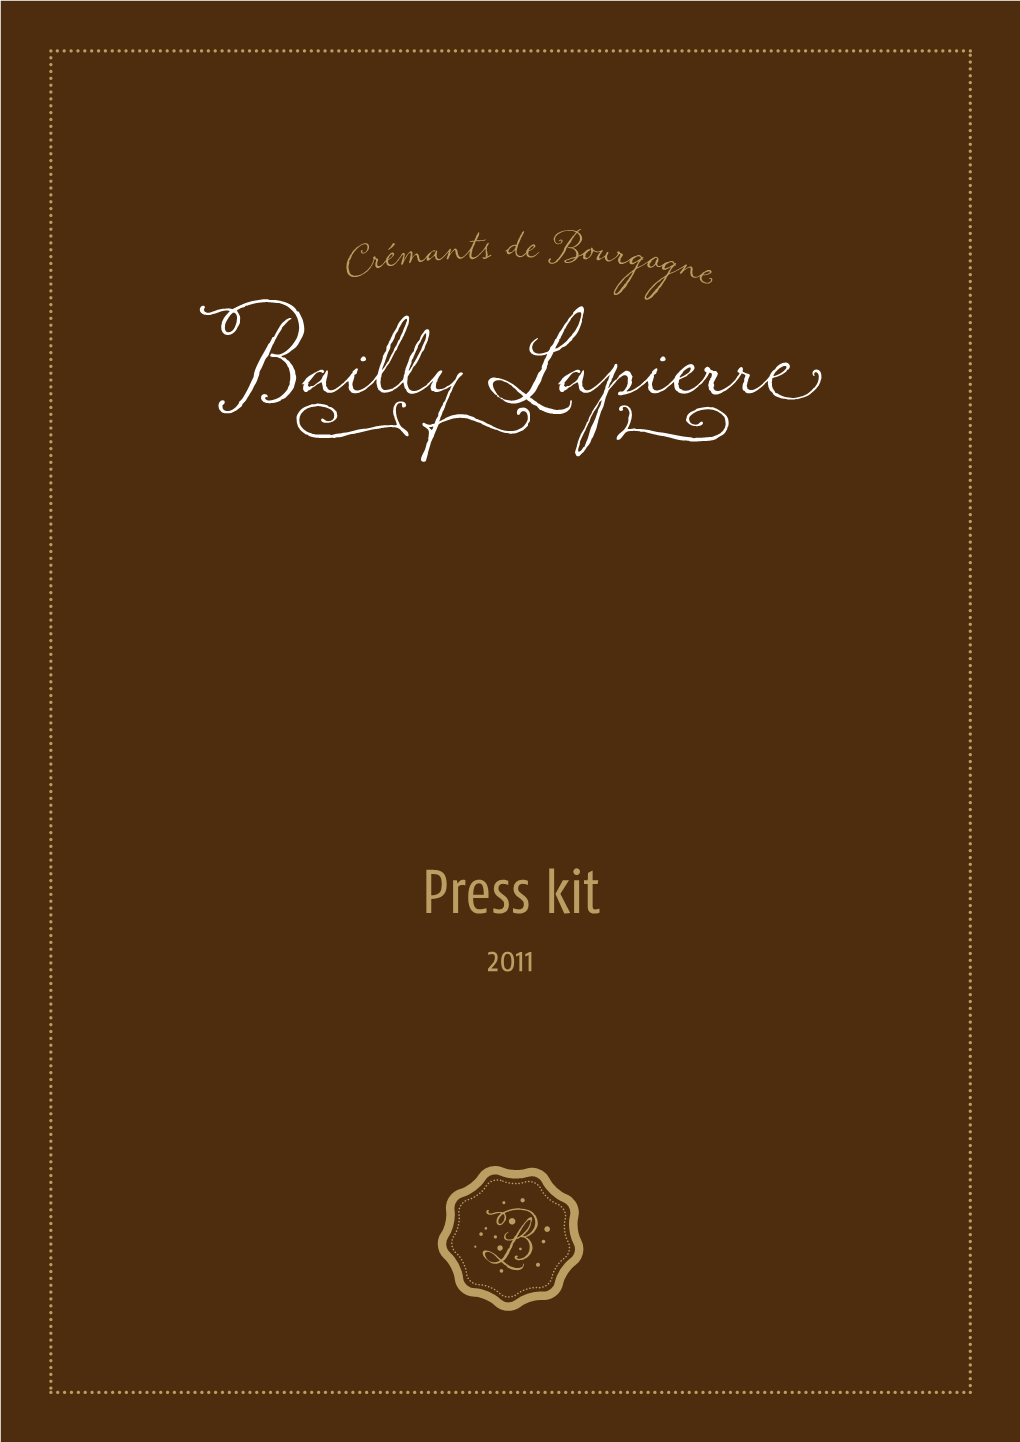 Press Kit 2011 Contents